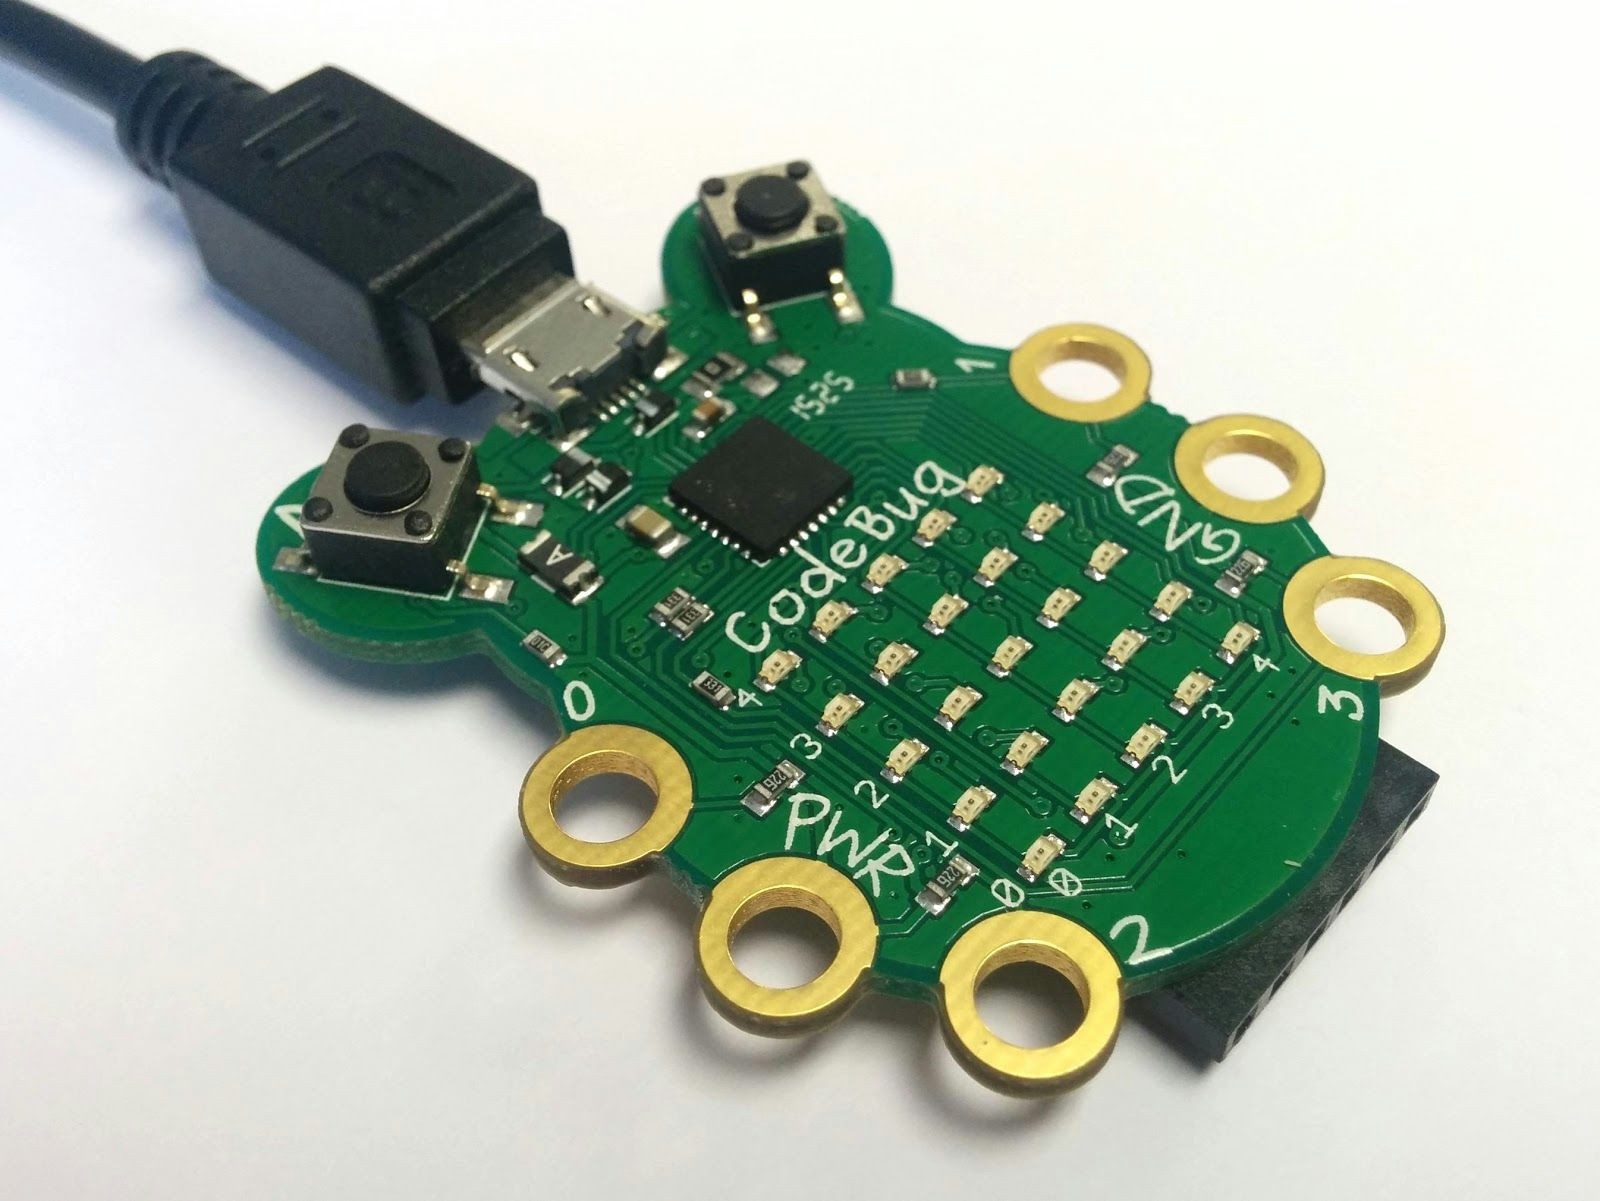 Image of CodeBug with micro USB cable